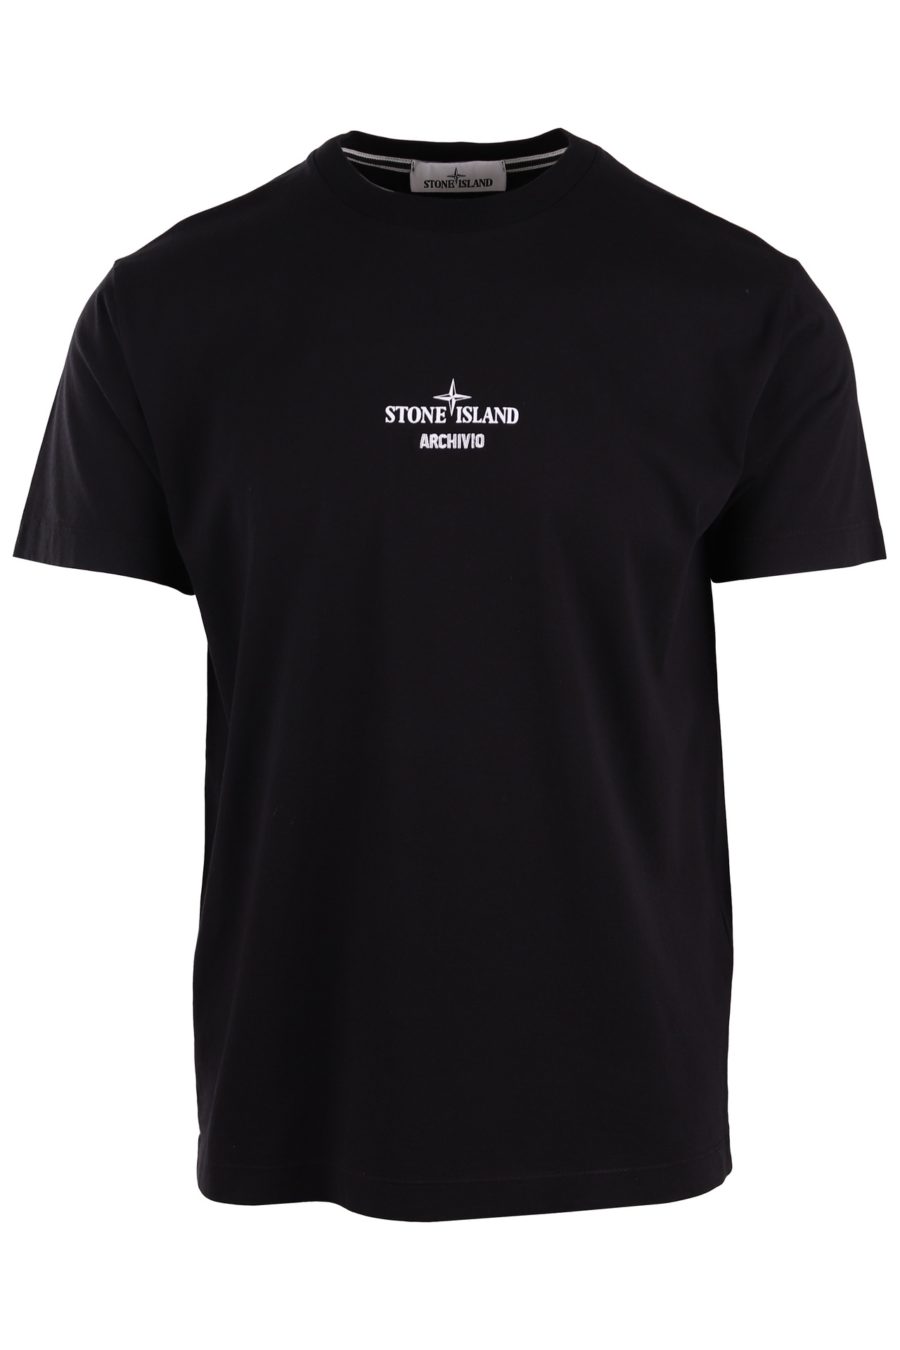 Camiseta Stone Island negra con logo "archivio" - 1973d037007b1329f76e48264457effc91aeb215